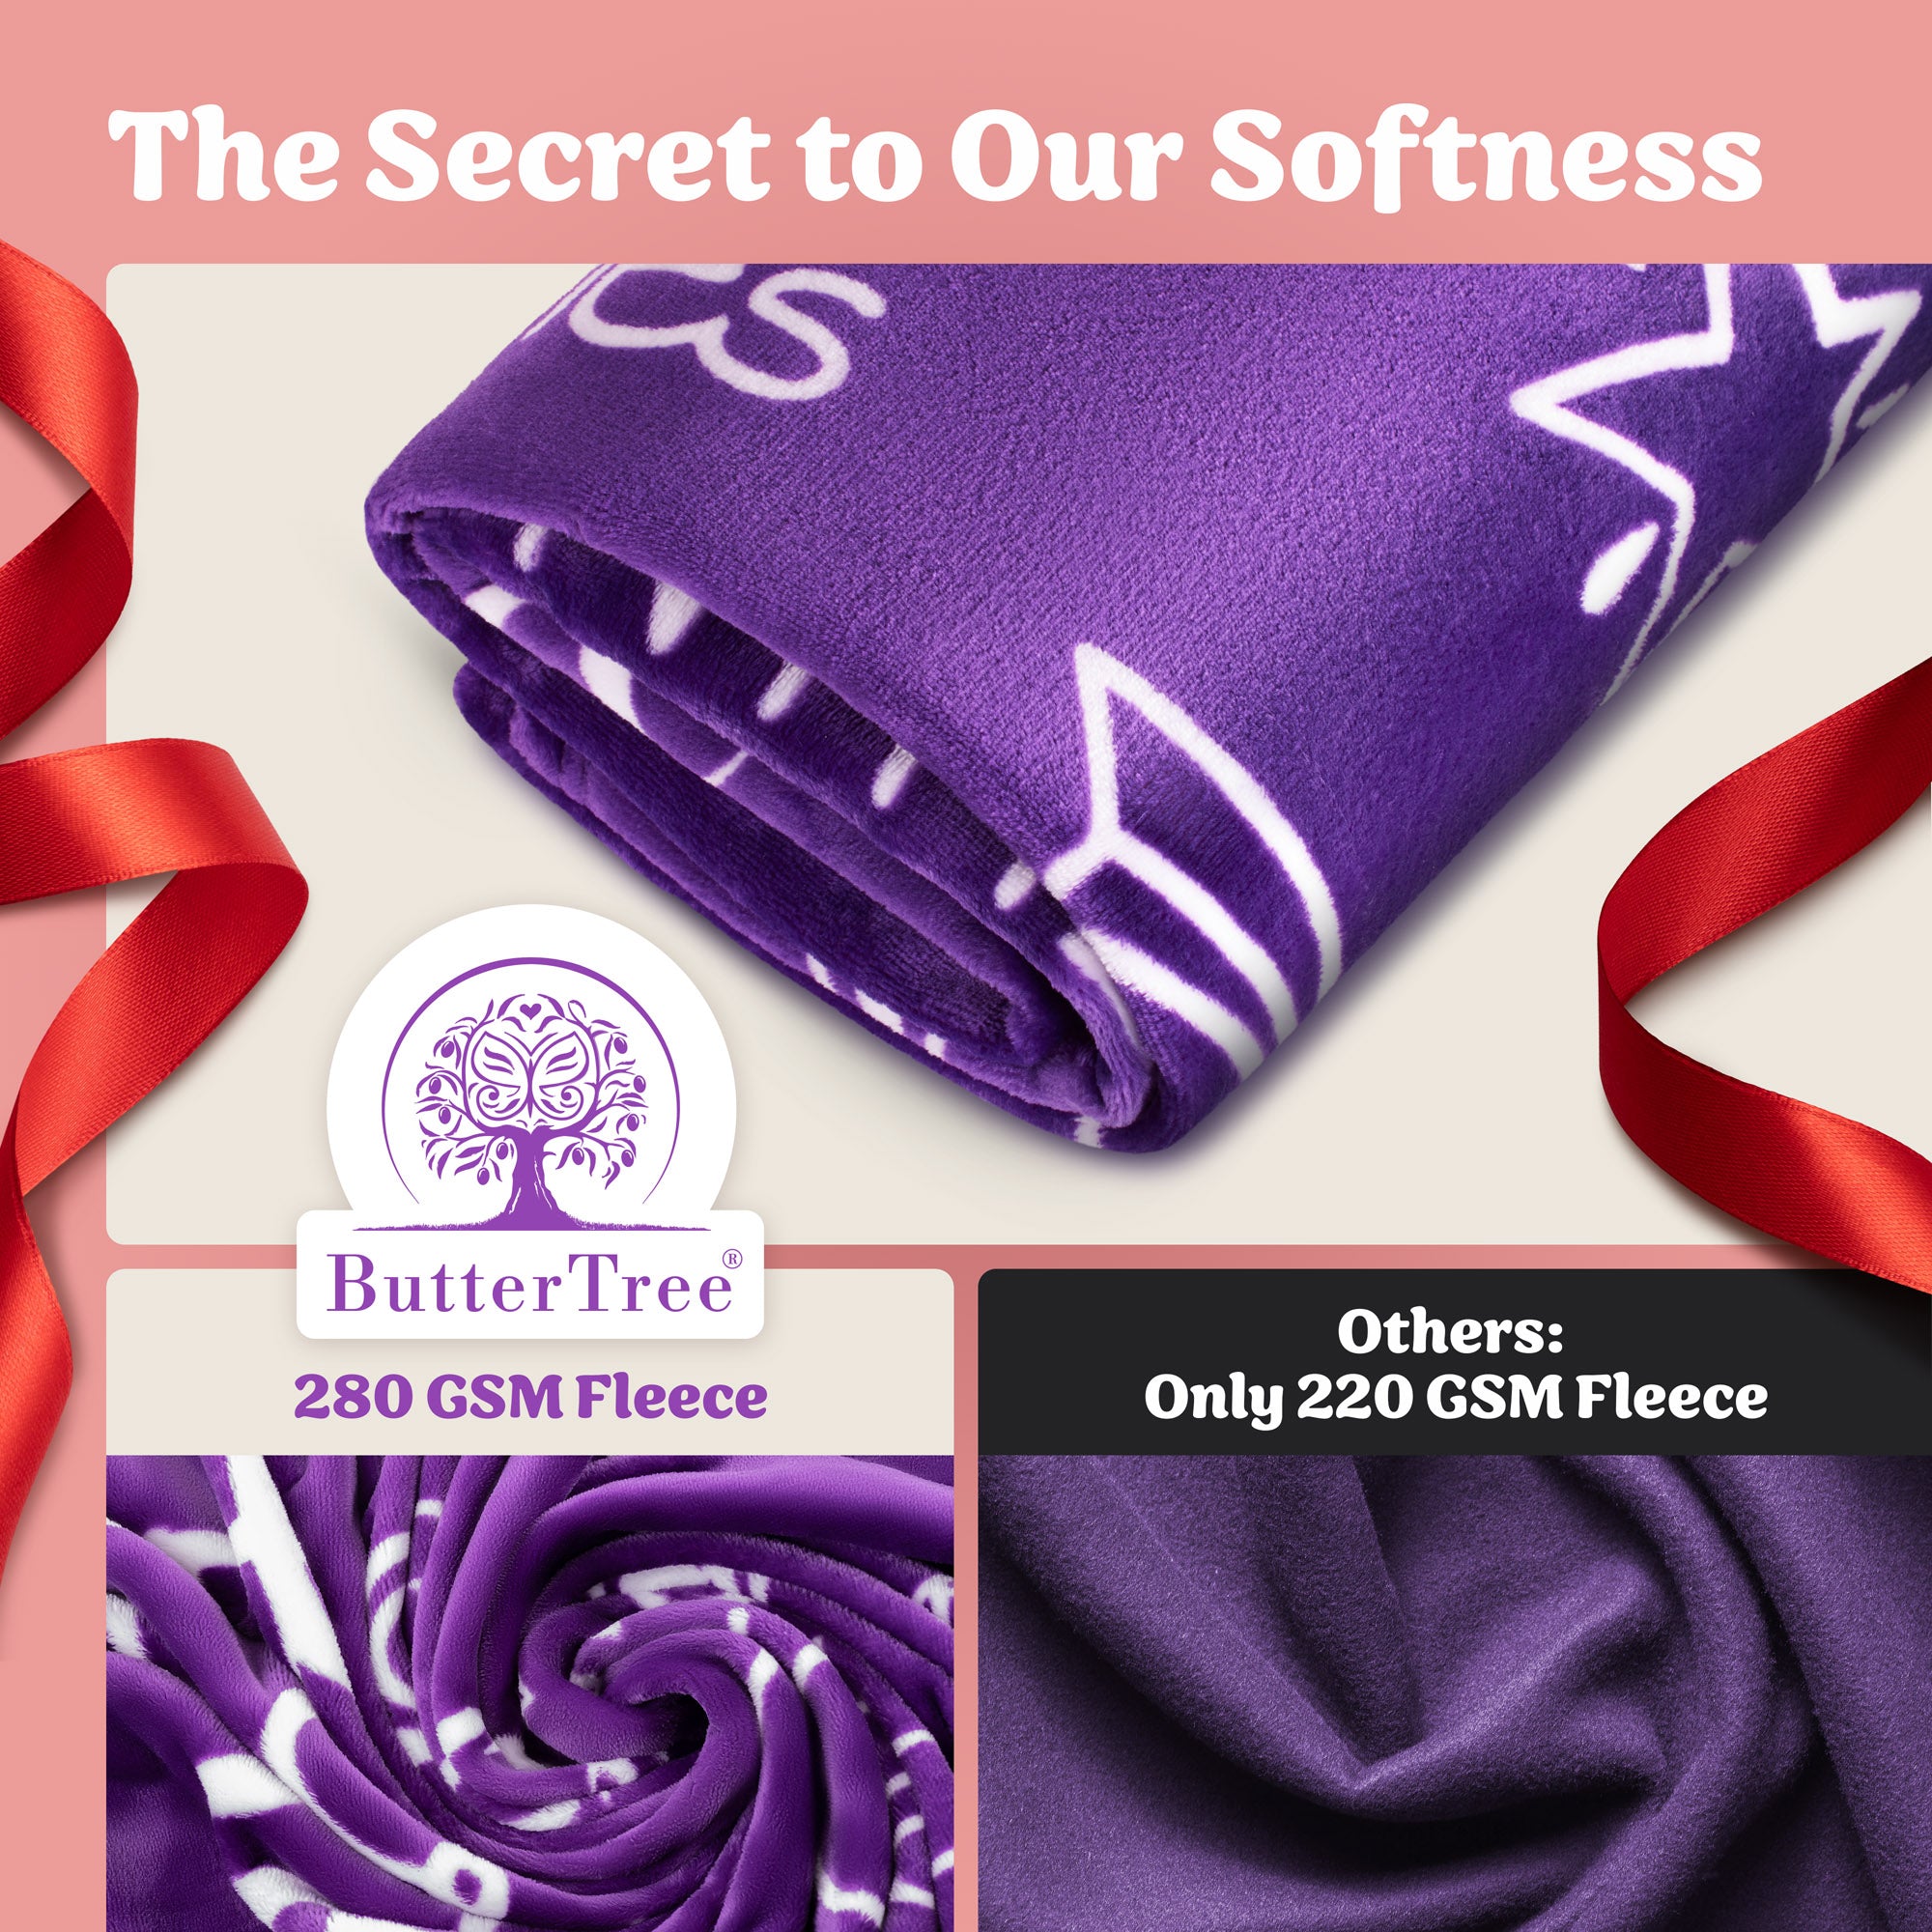 BFF Gift Blanket (Purple)